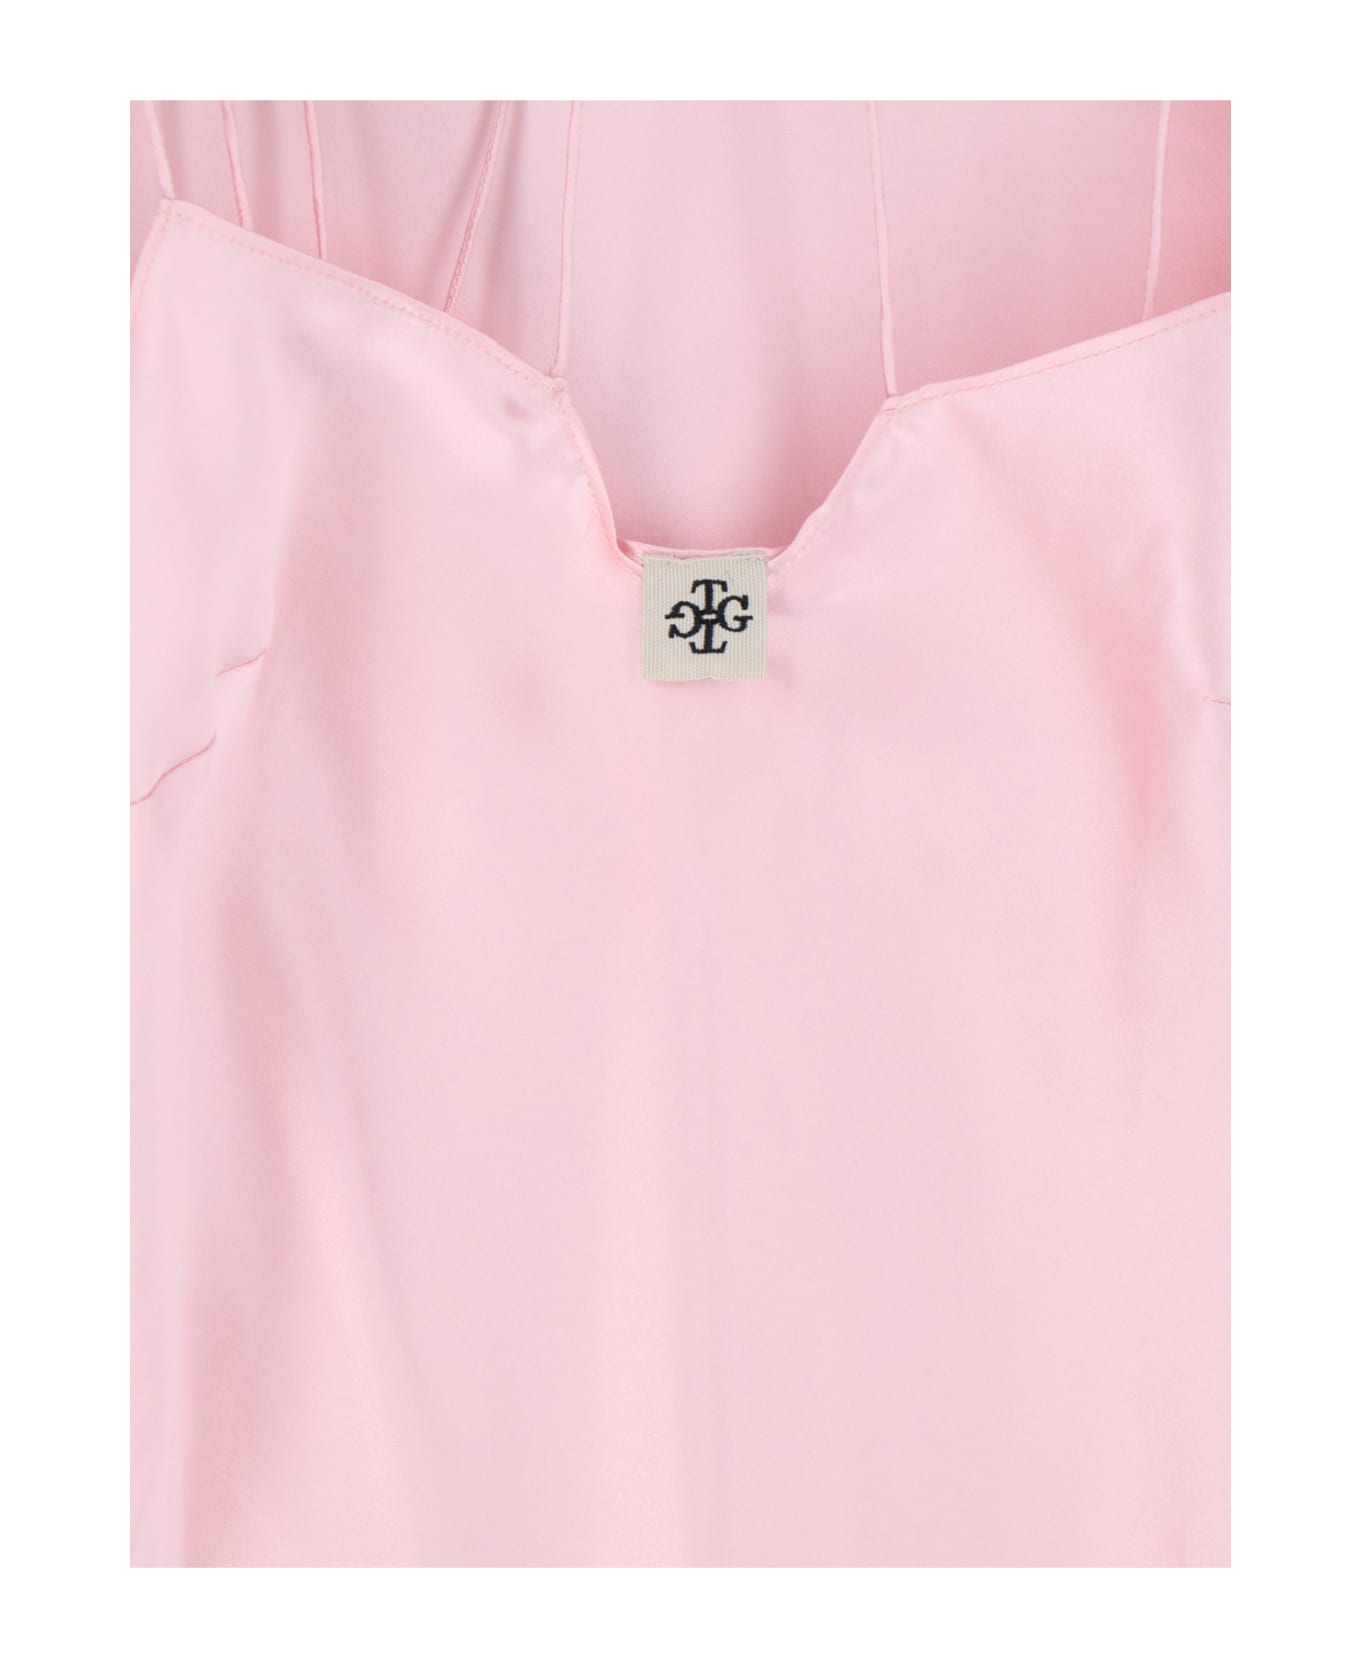 The Garment 'catania' Maxi Dress - Pink